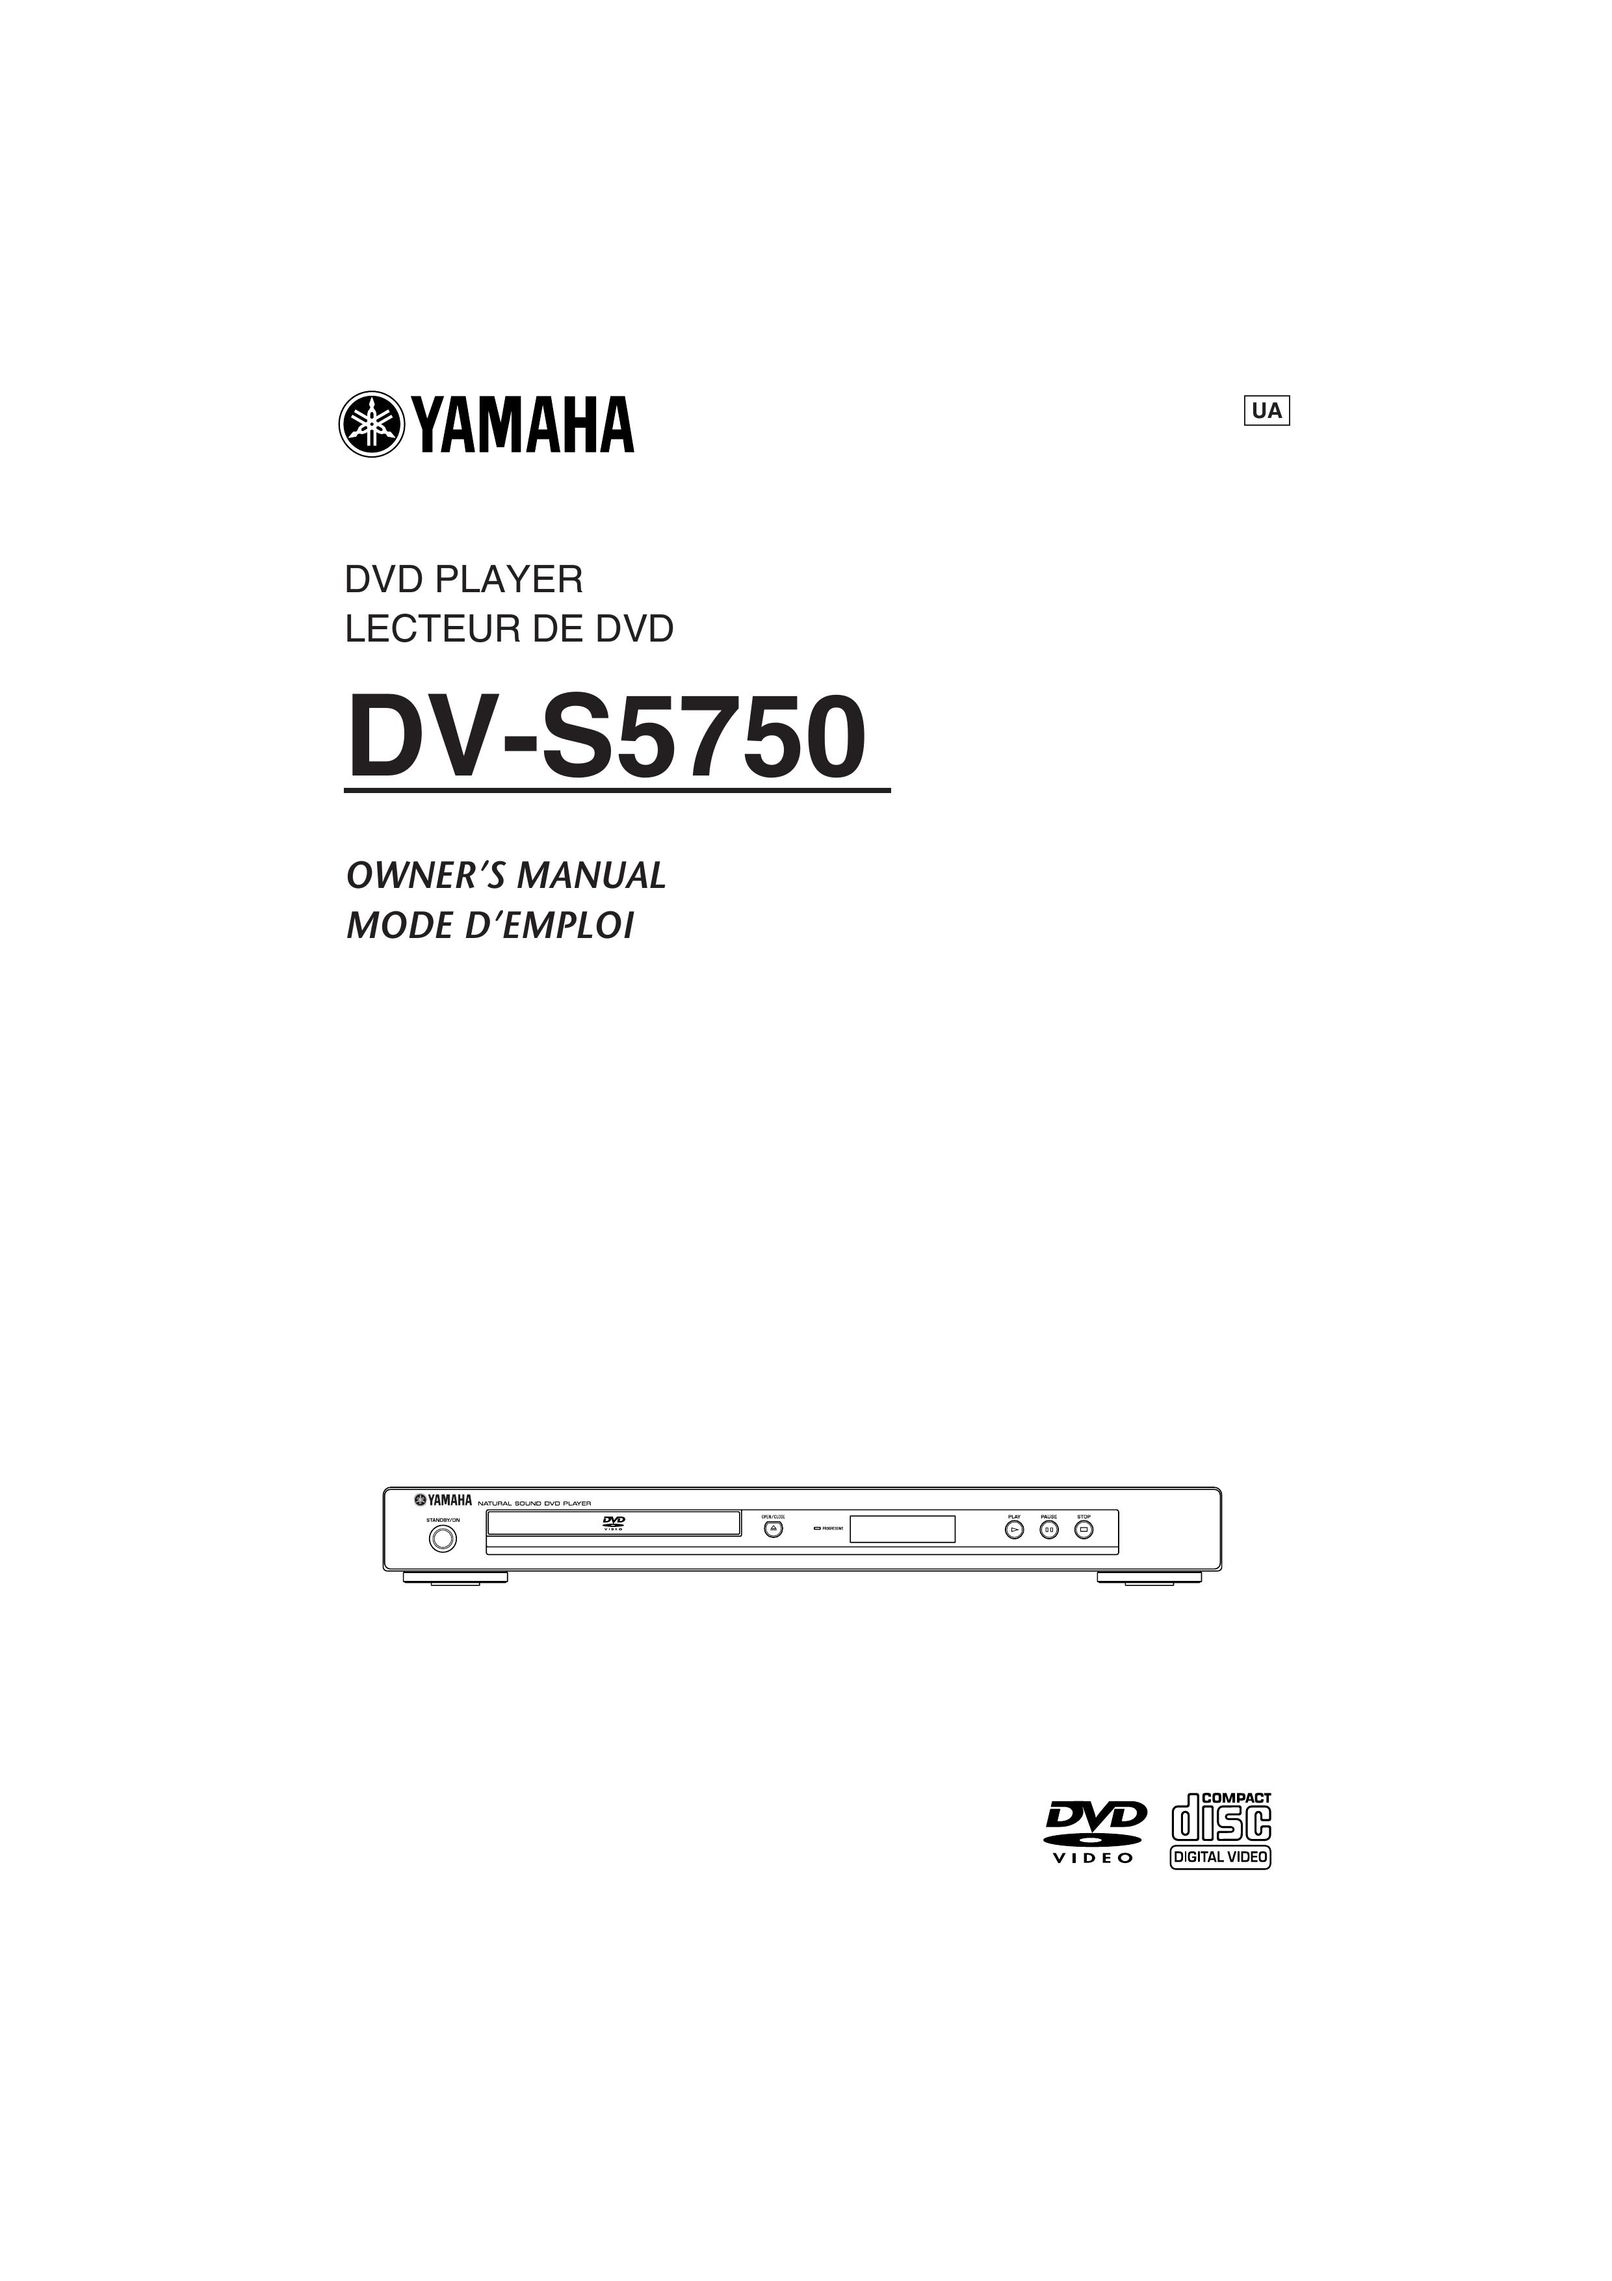 Yamaha DV-S5750 DVD Player User Manual